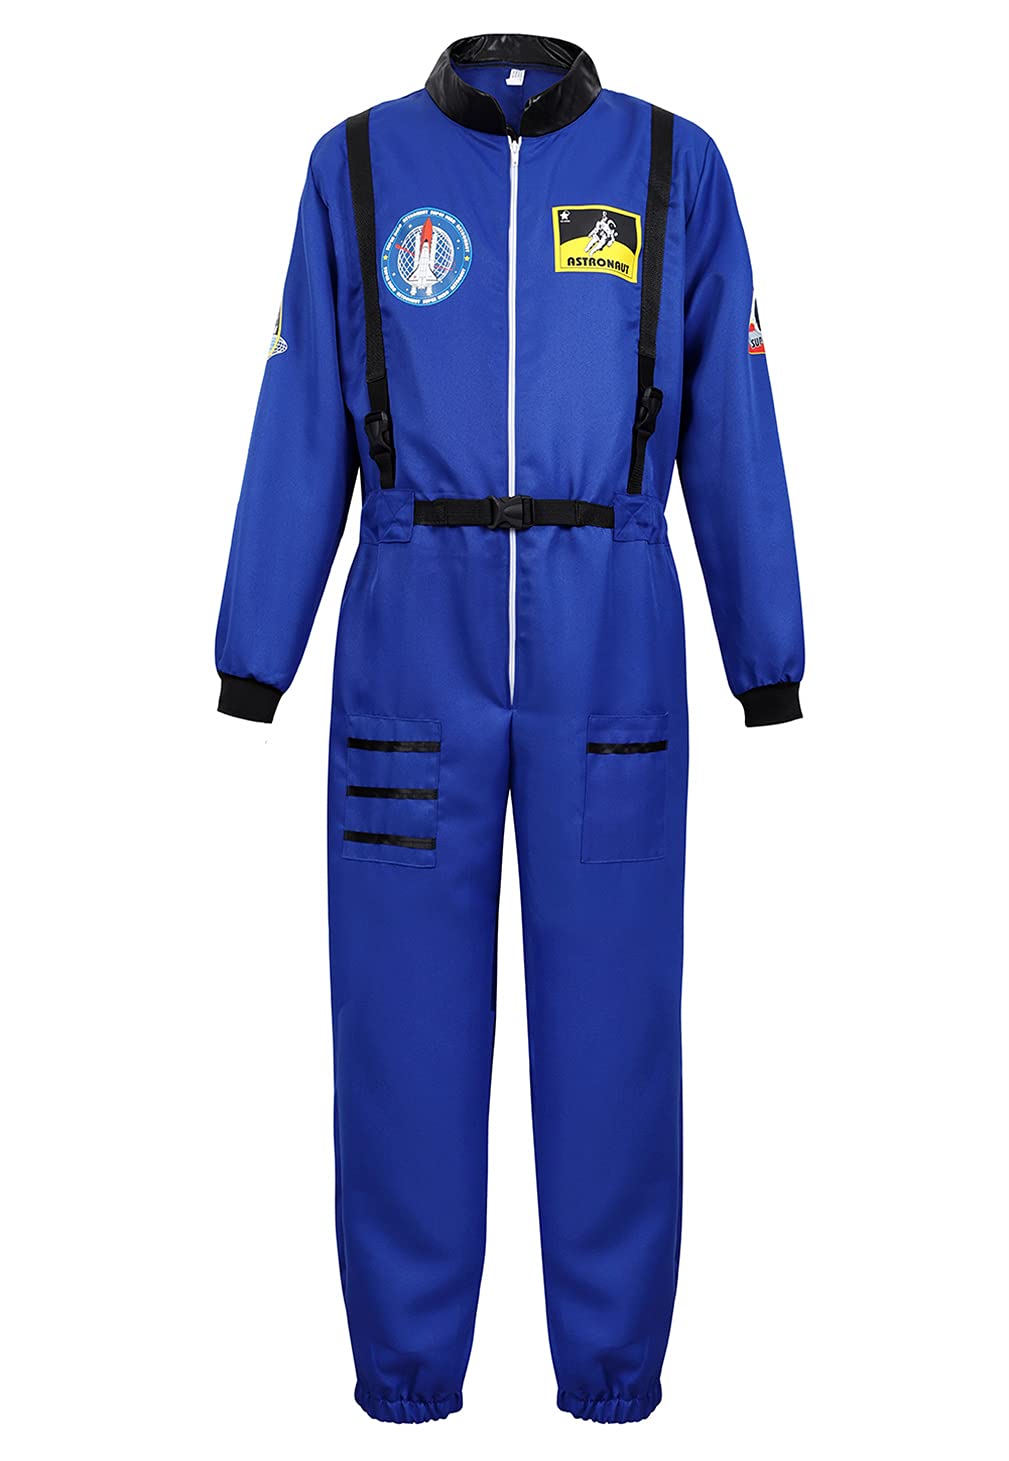 Book Cover Haorugut Men Astronaut Costume Adult Men Space Suit Costume Flight Astronaut Jumpsuit Oneise S Blue-6398